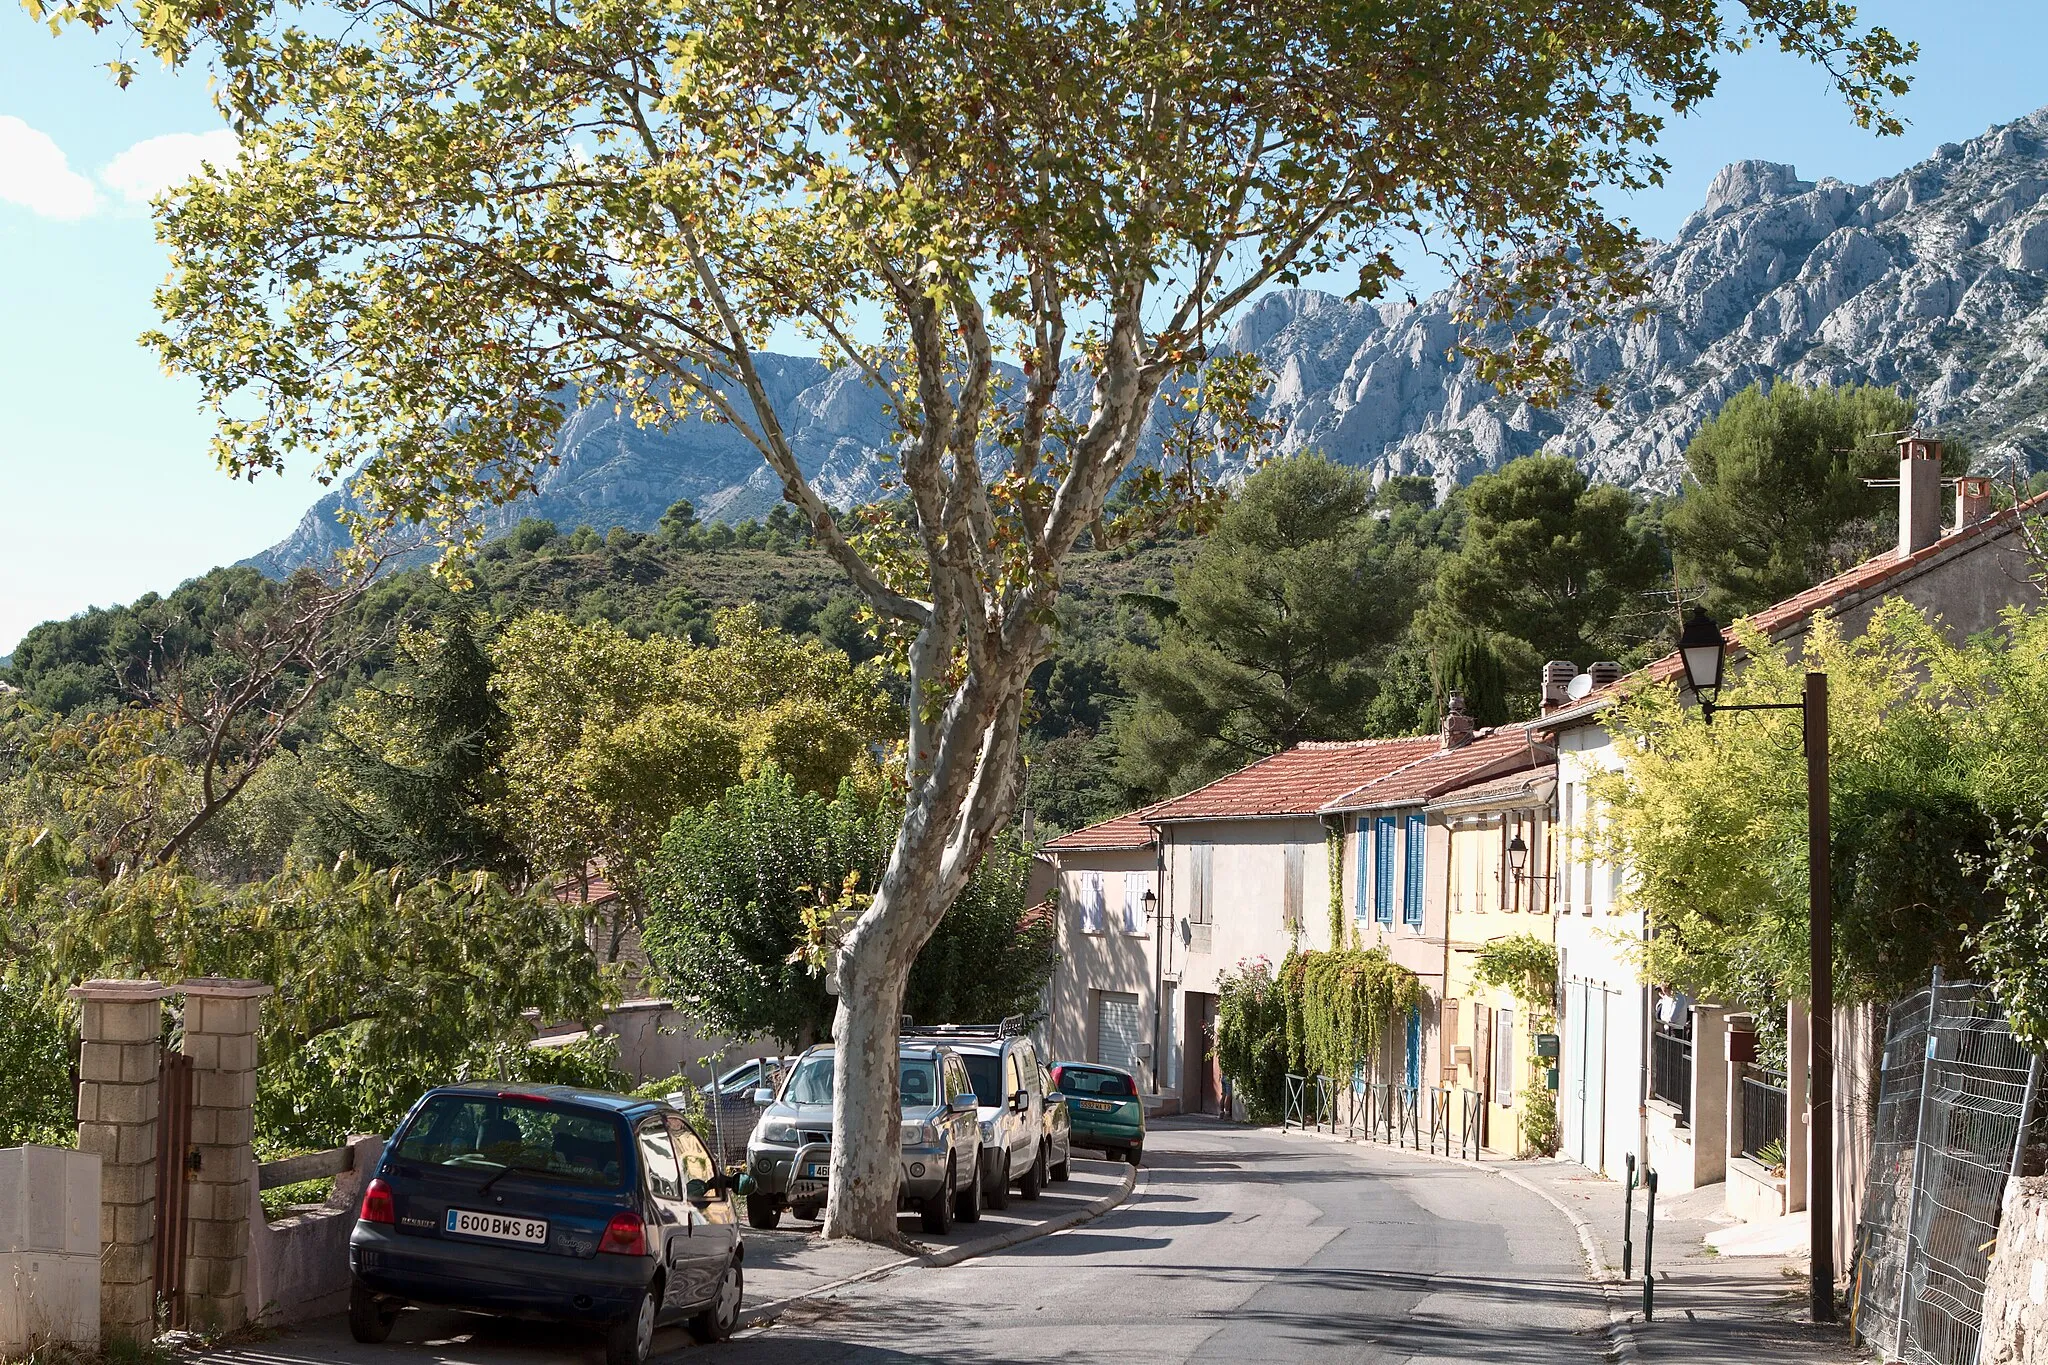 Photo showing: Main street of Puyloubier, Bouches-du-Rhône (France).